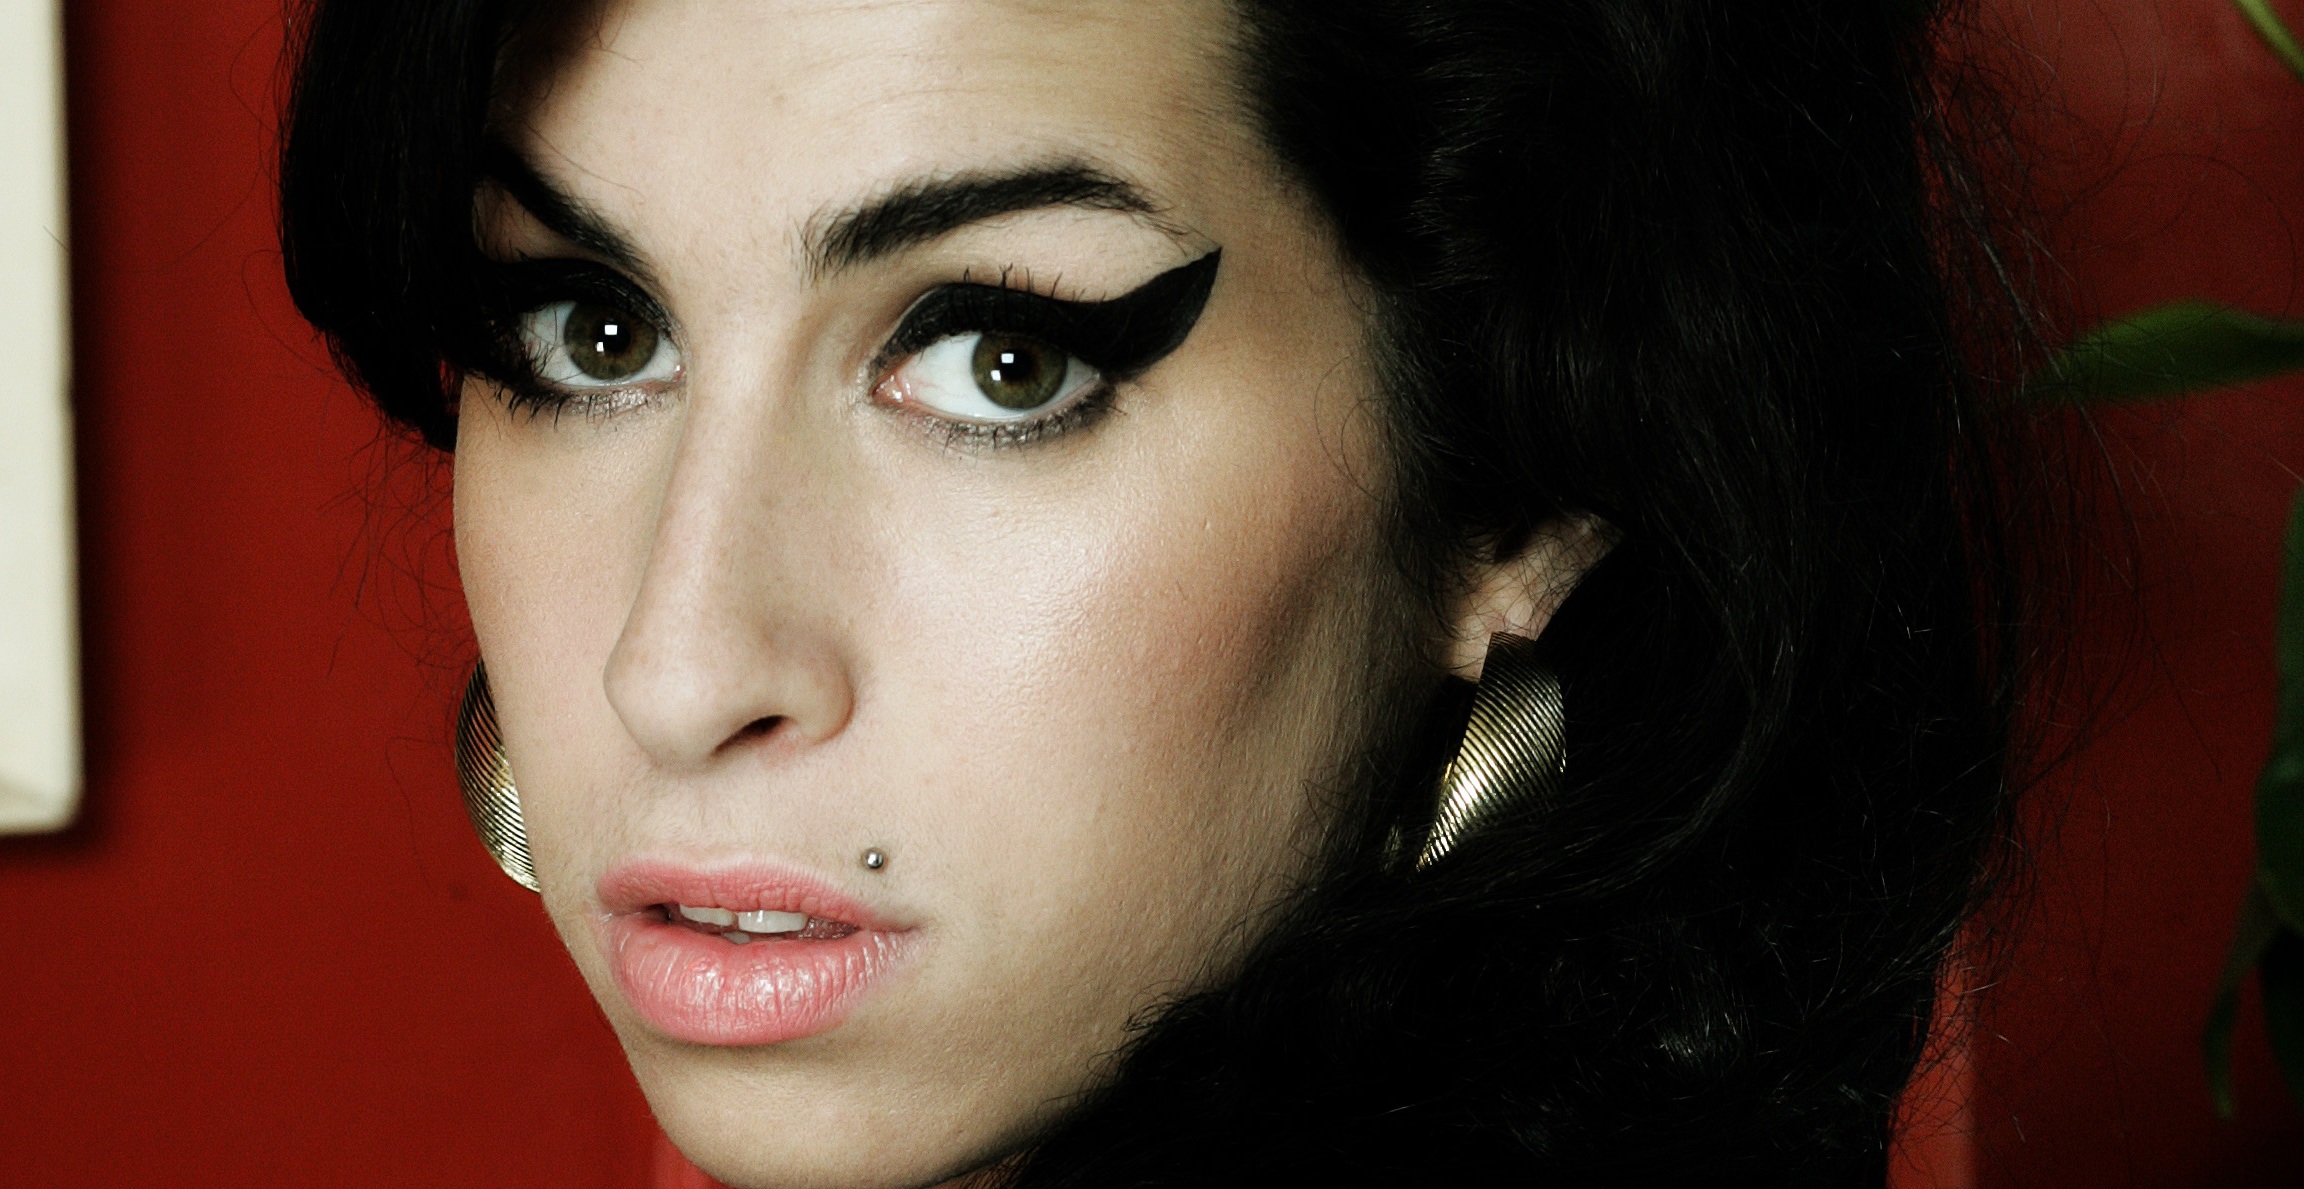 Amy Winehouse nechcela byť slávna. Len milovaná